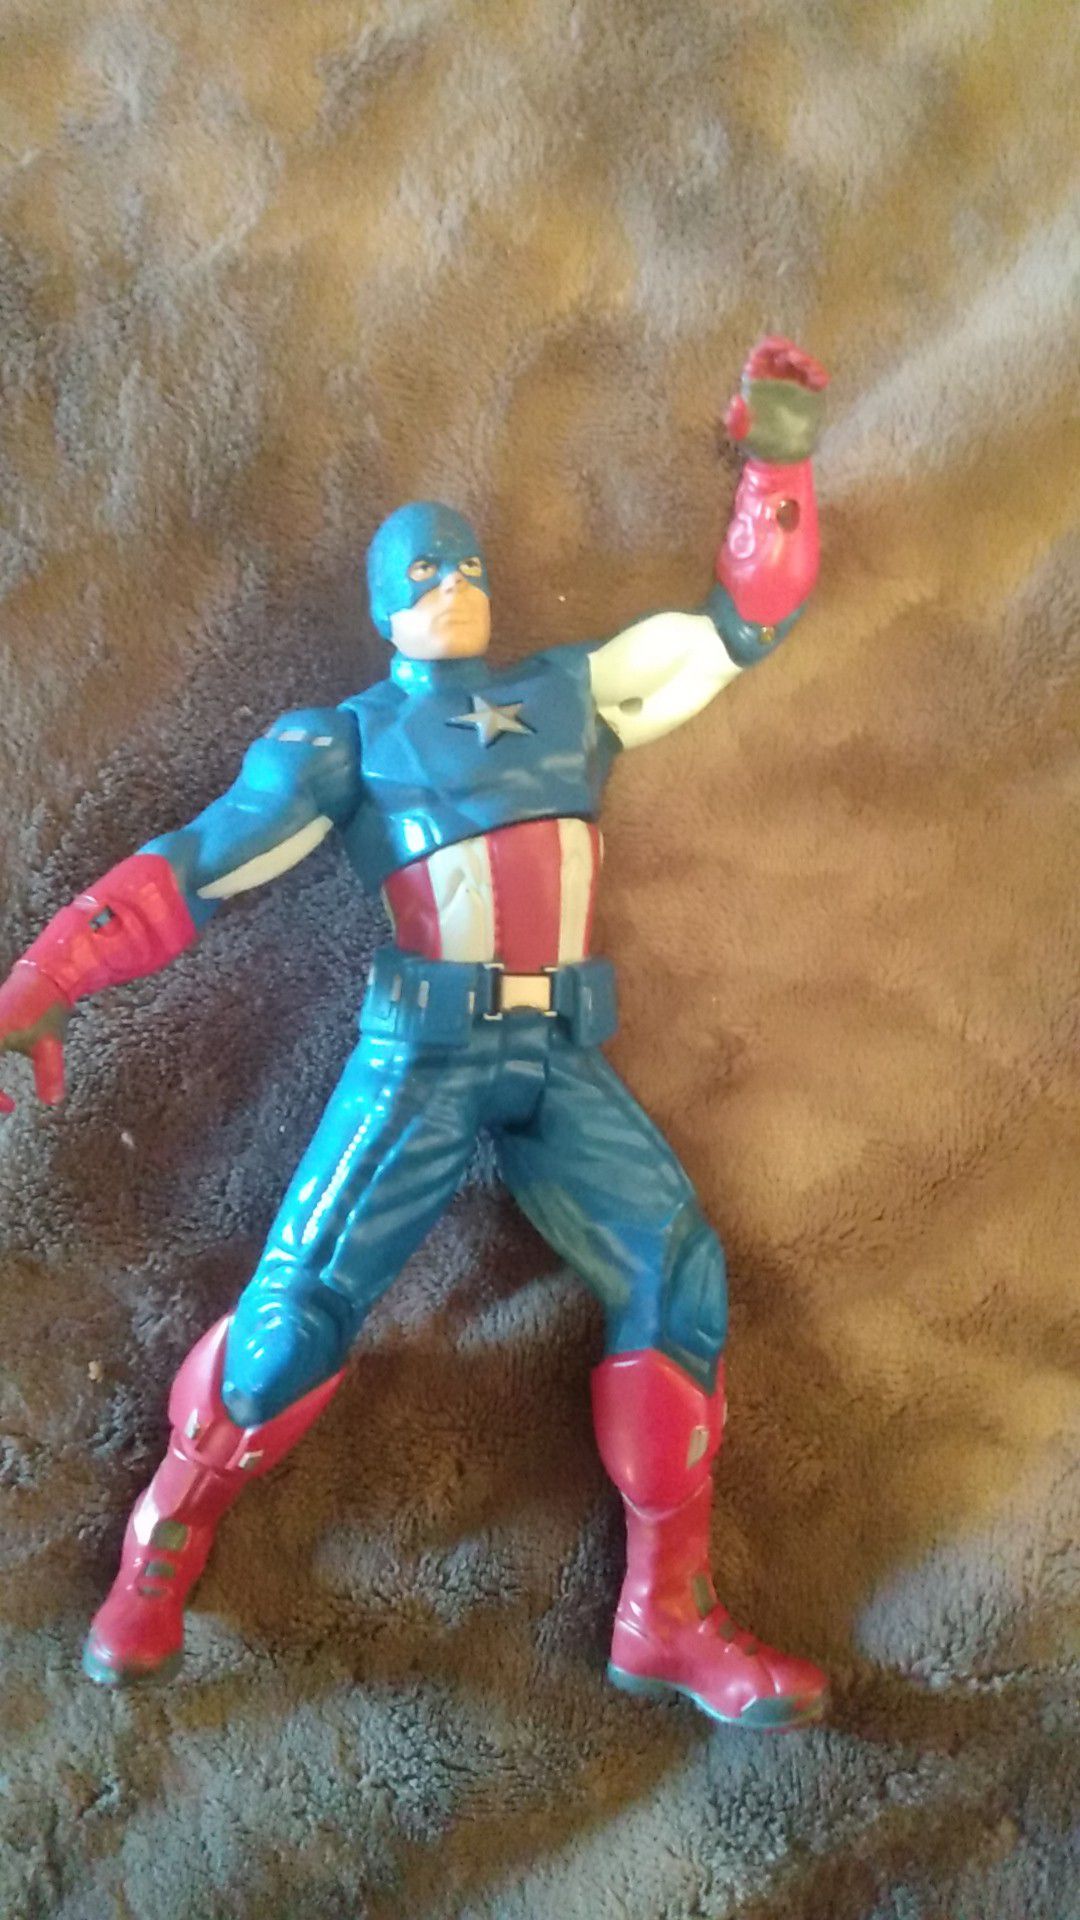 Captain America action hero figure